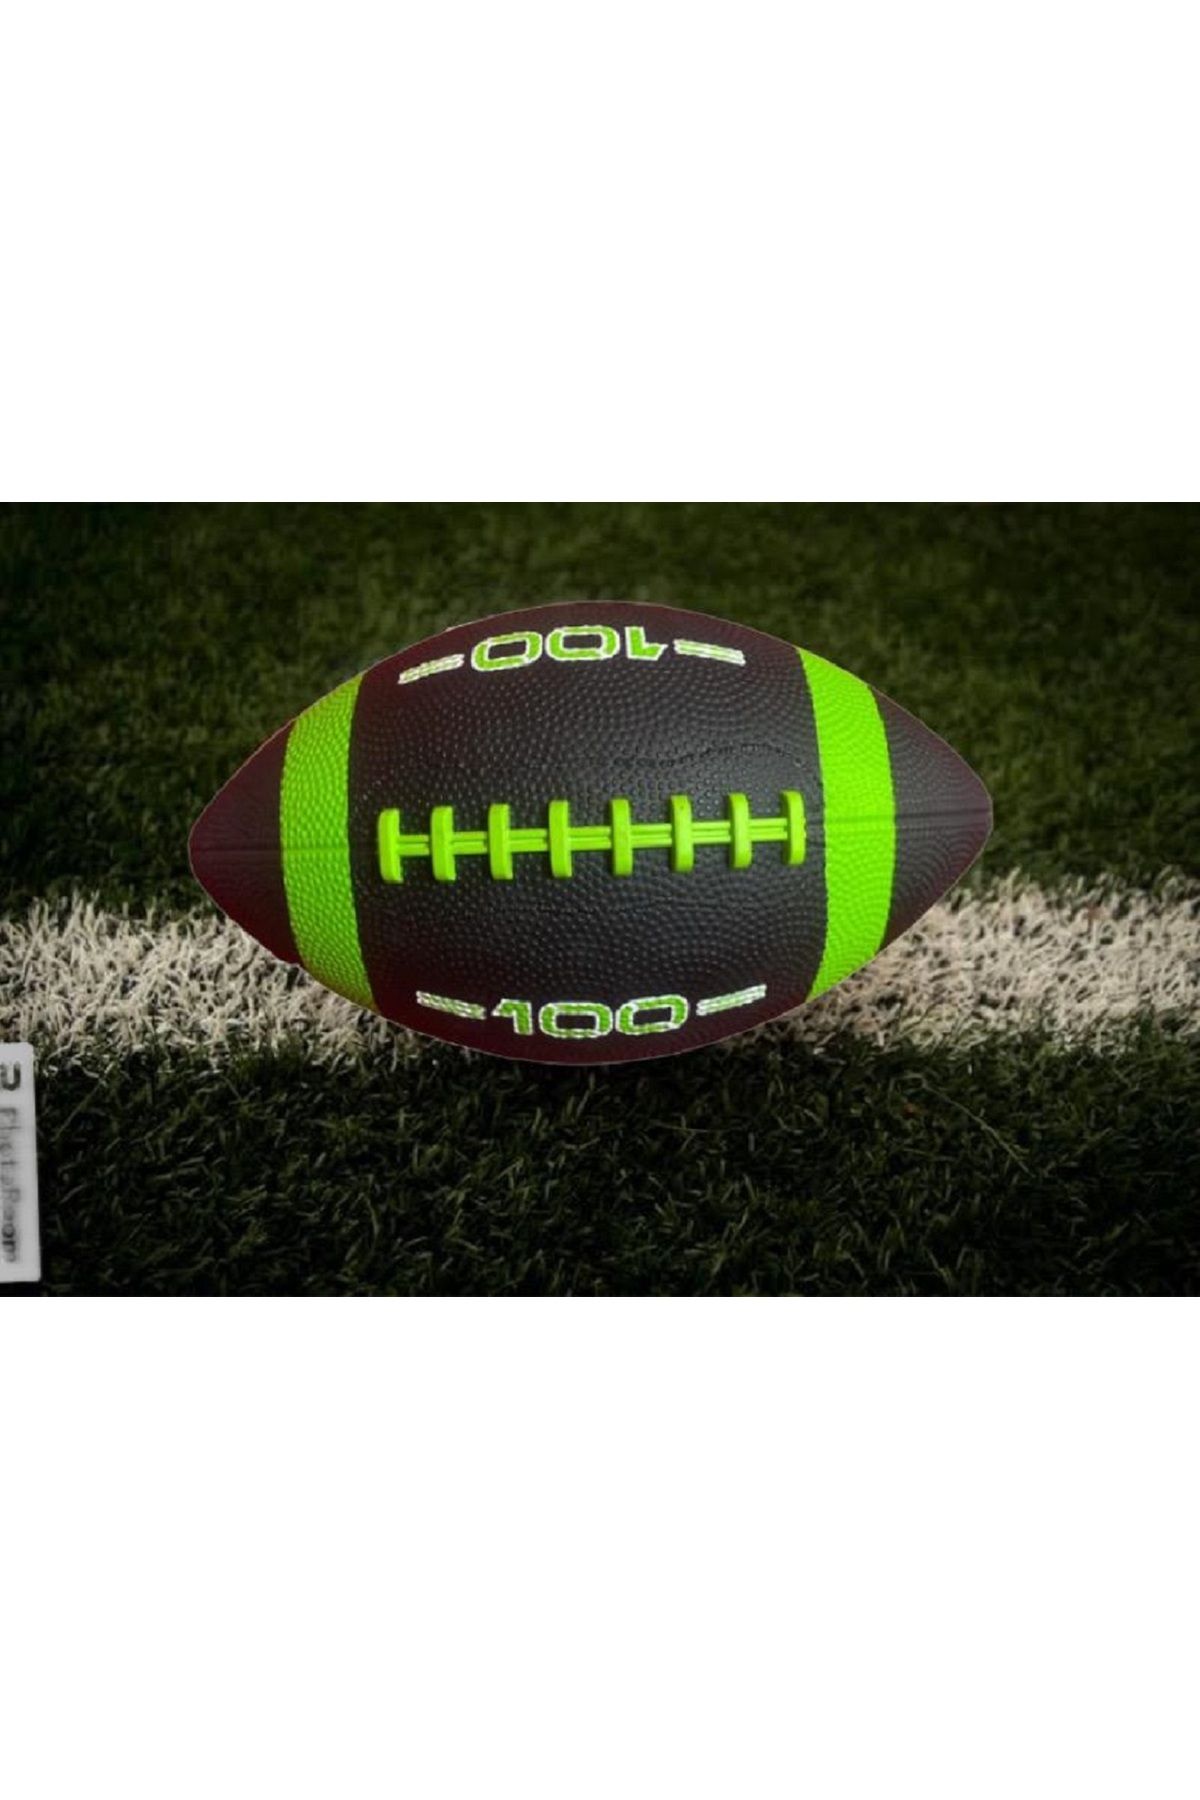 Franklin Football Warrıor Unisex Amerikan Futbol Topu (28-15)cm